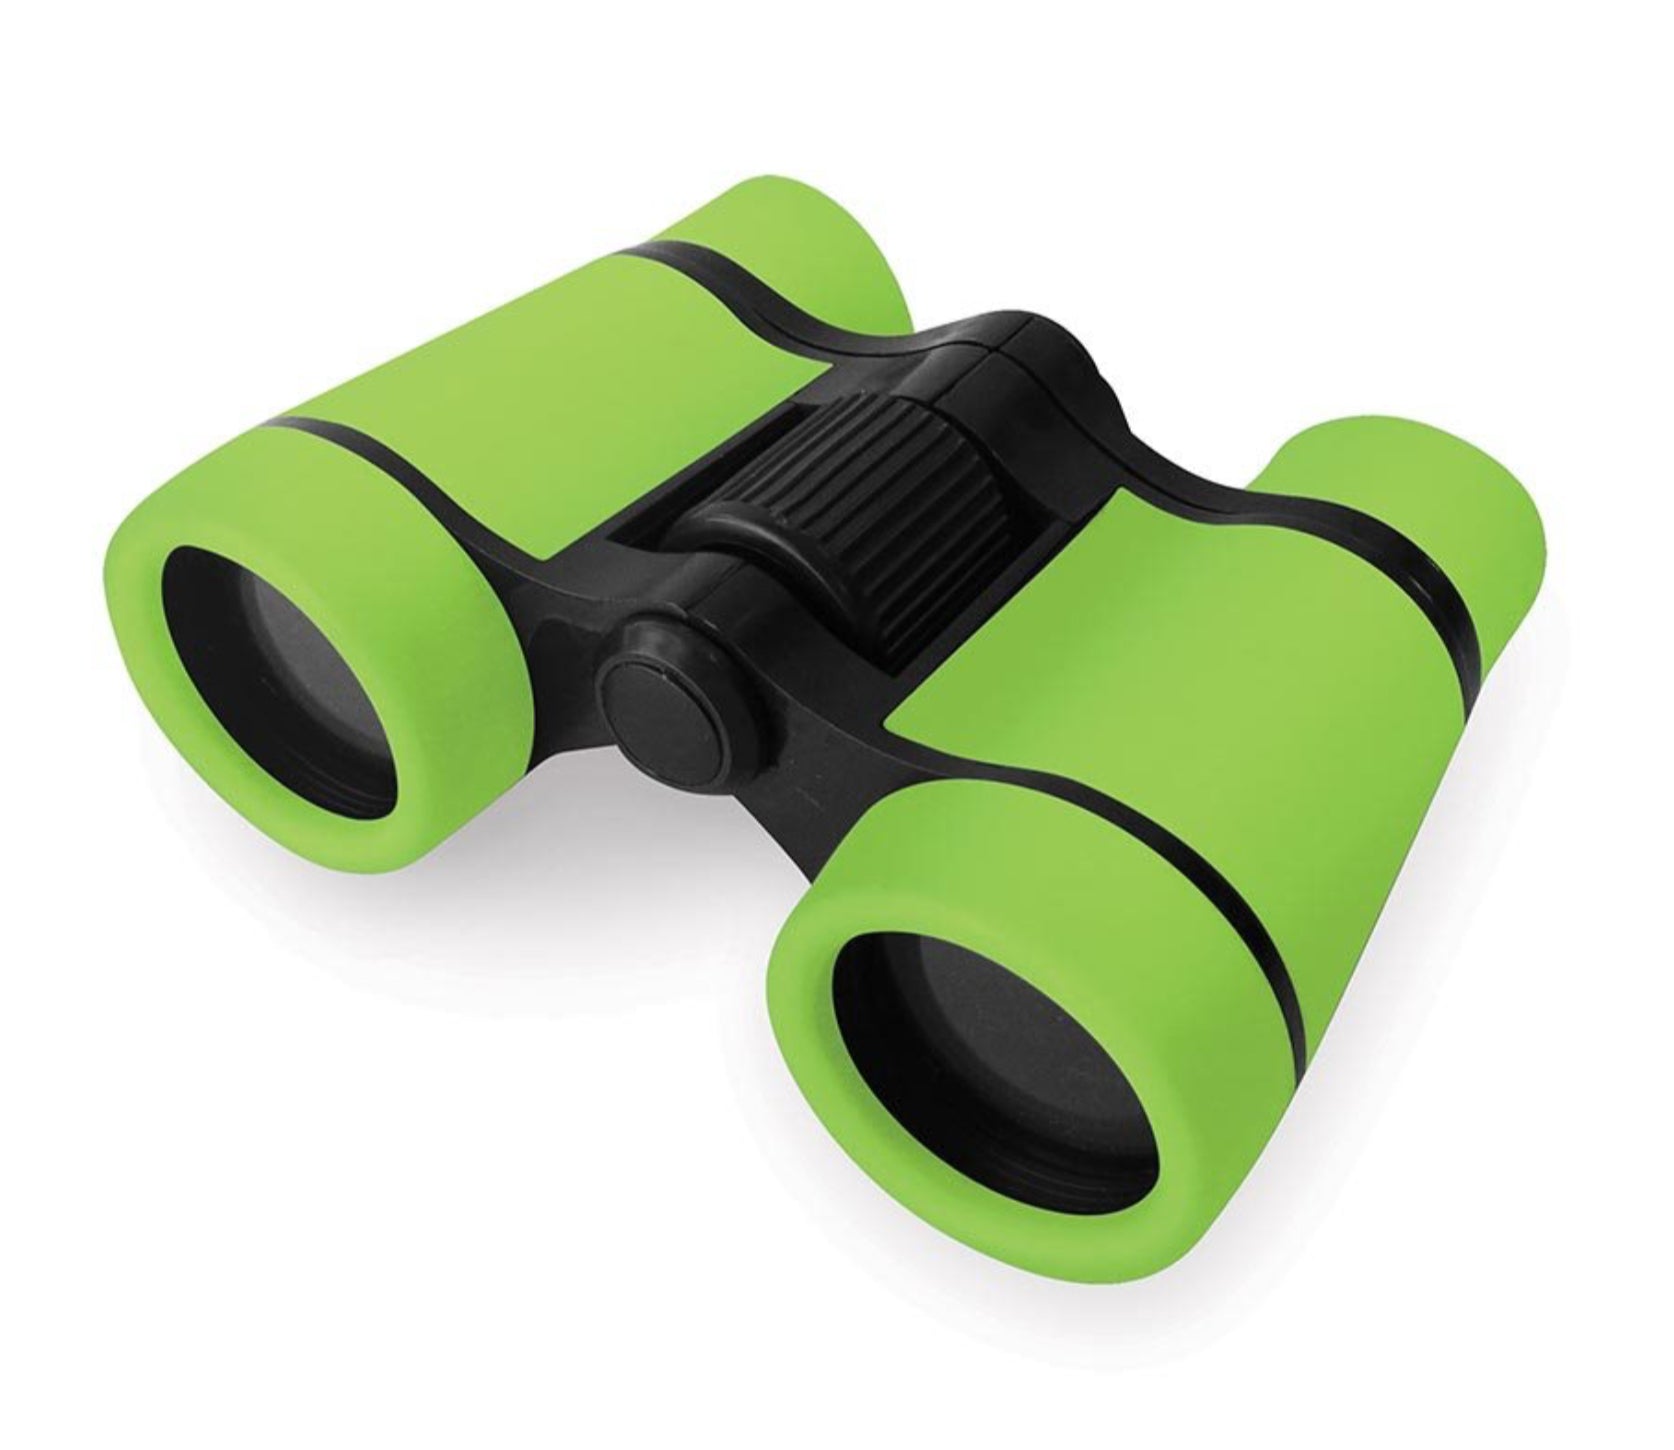 Discovery Zone / Compact Binoculars